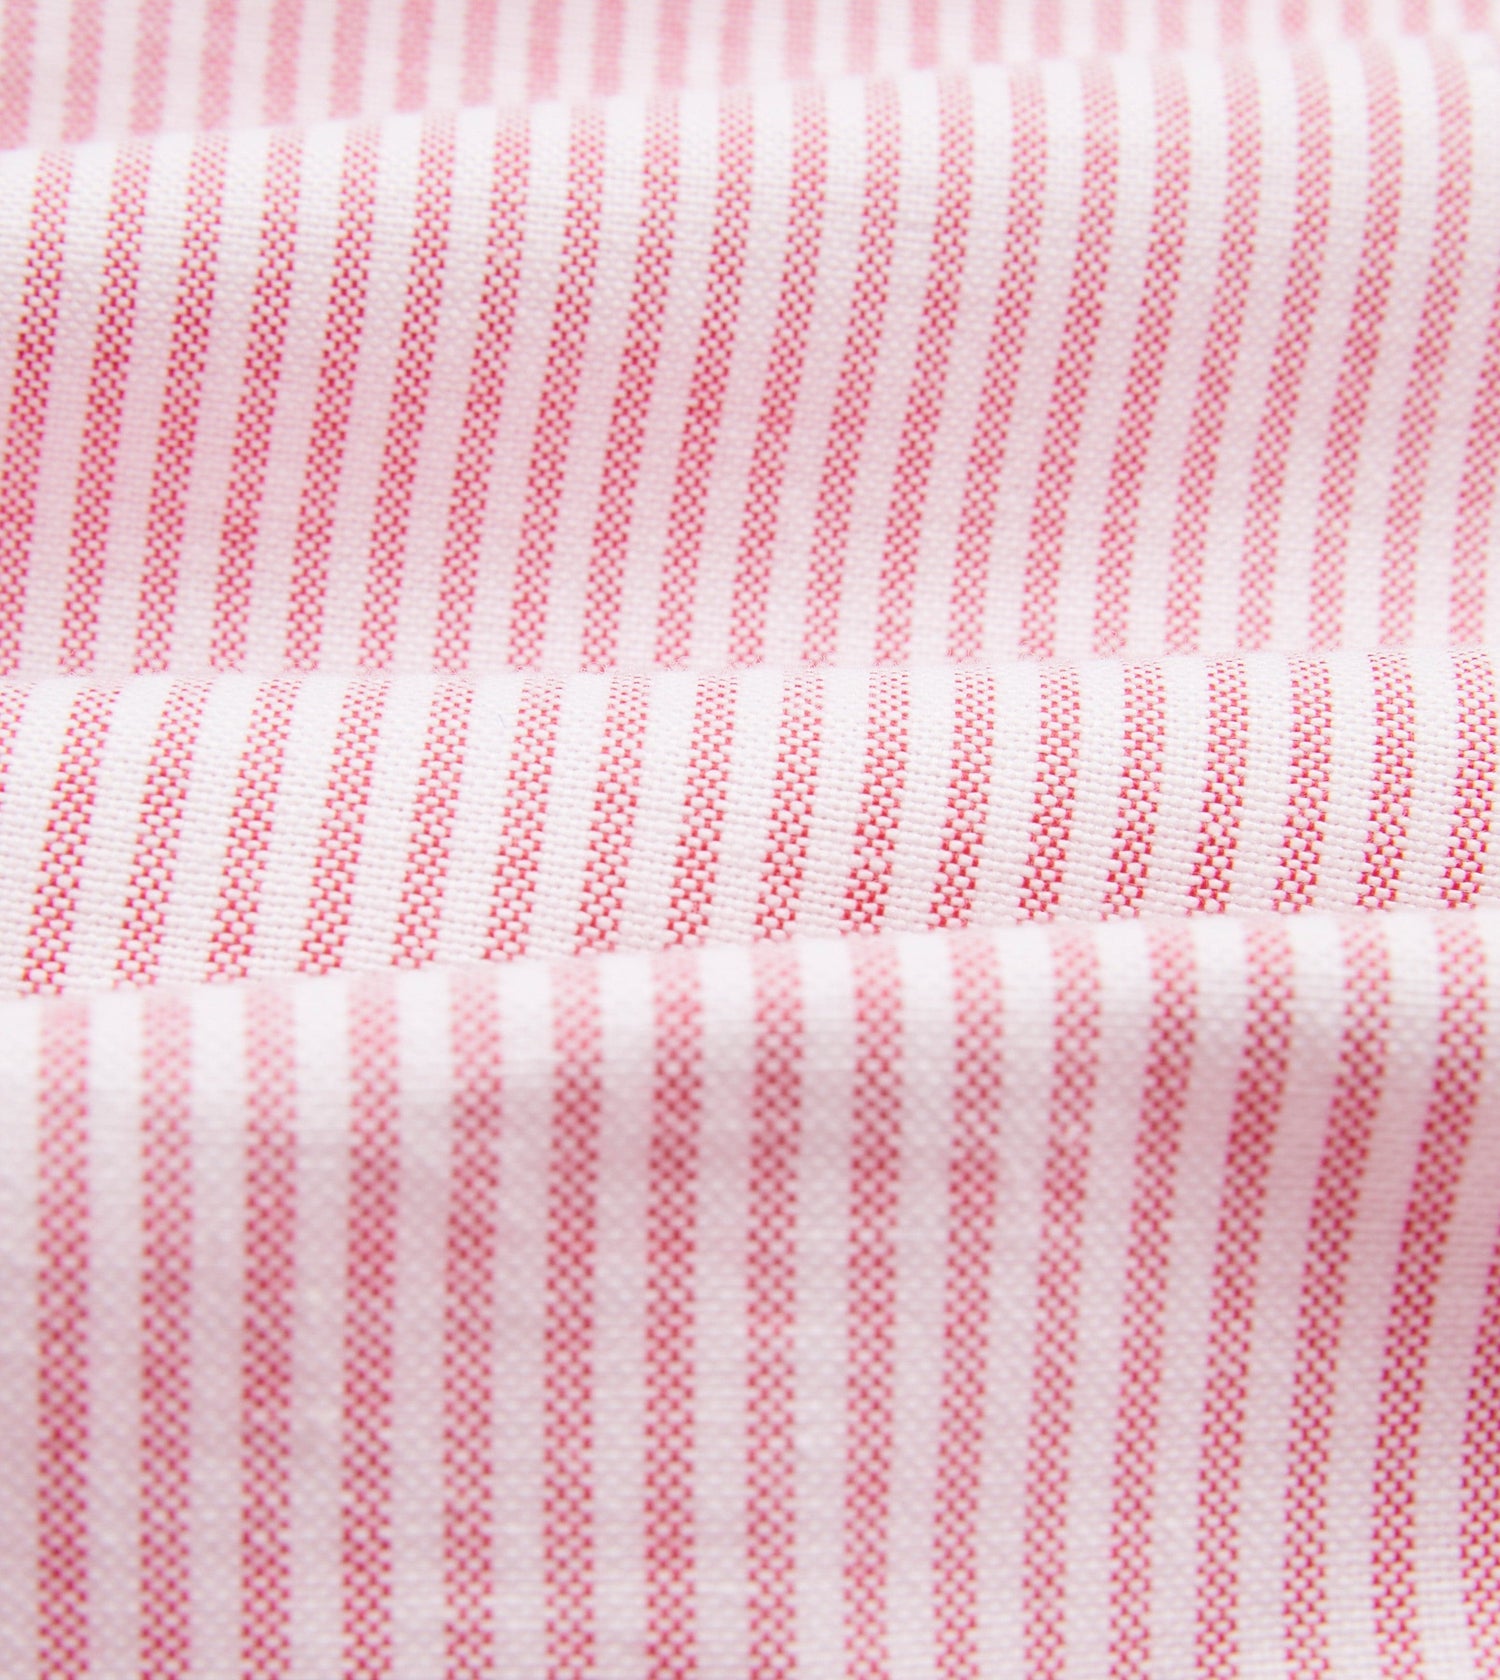 Pink Ticking Stripe Cotton Oxford Cloth Button-Down Shirt